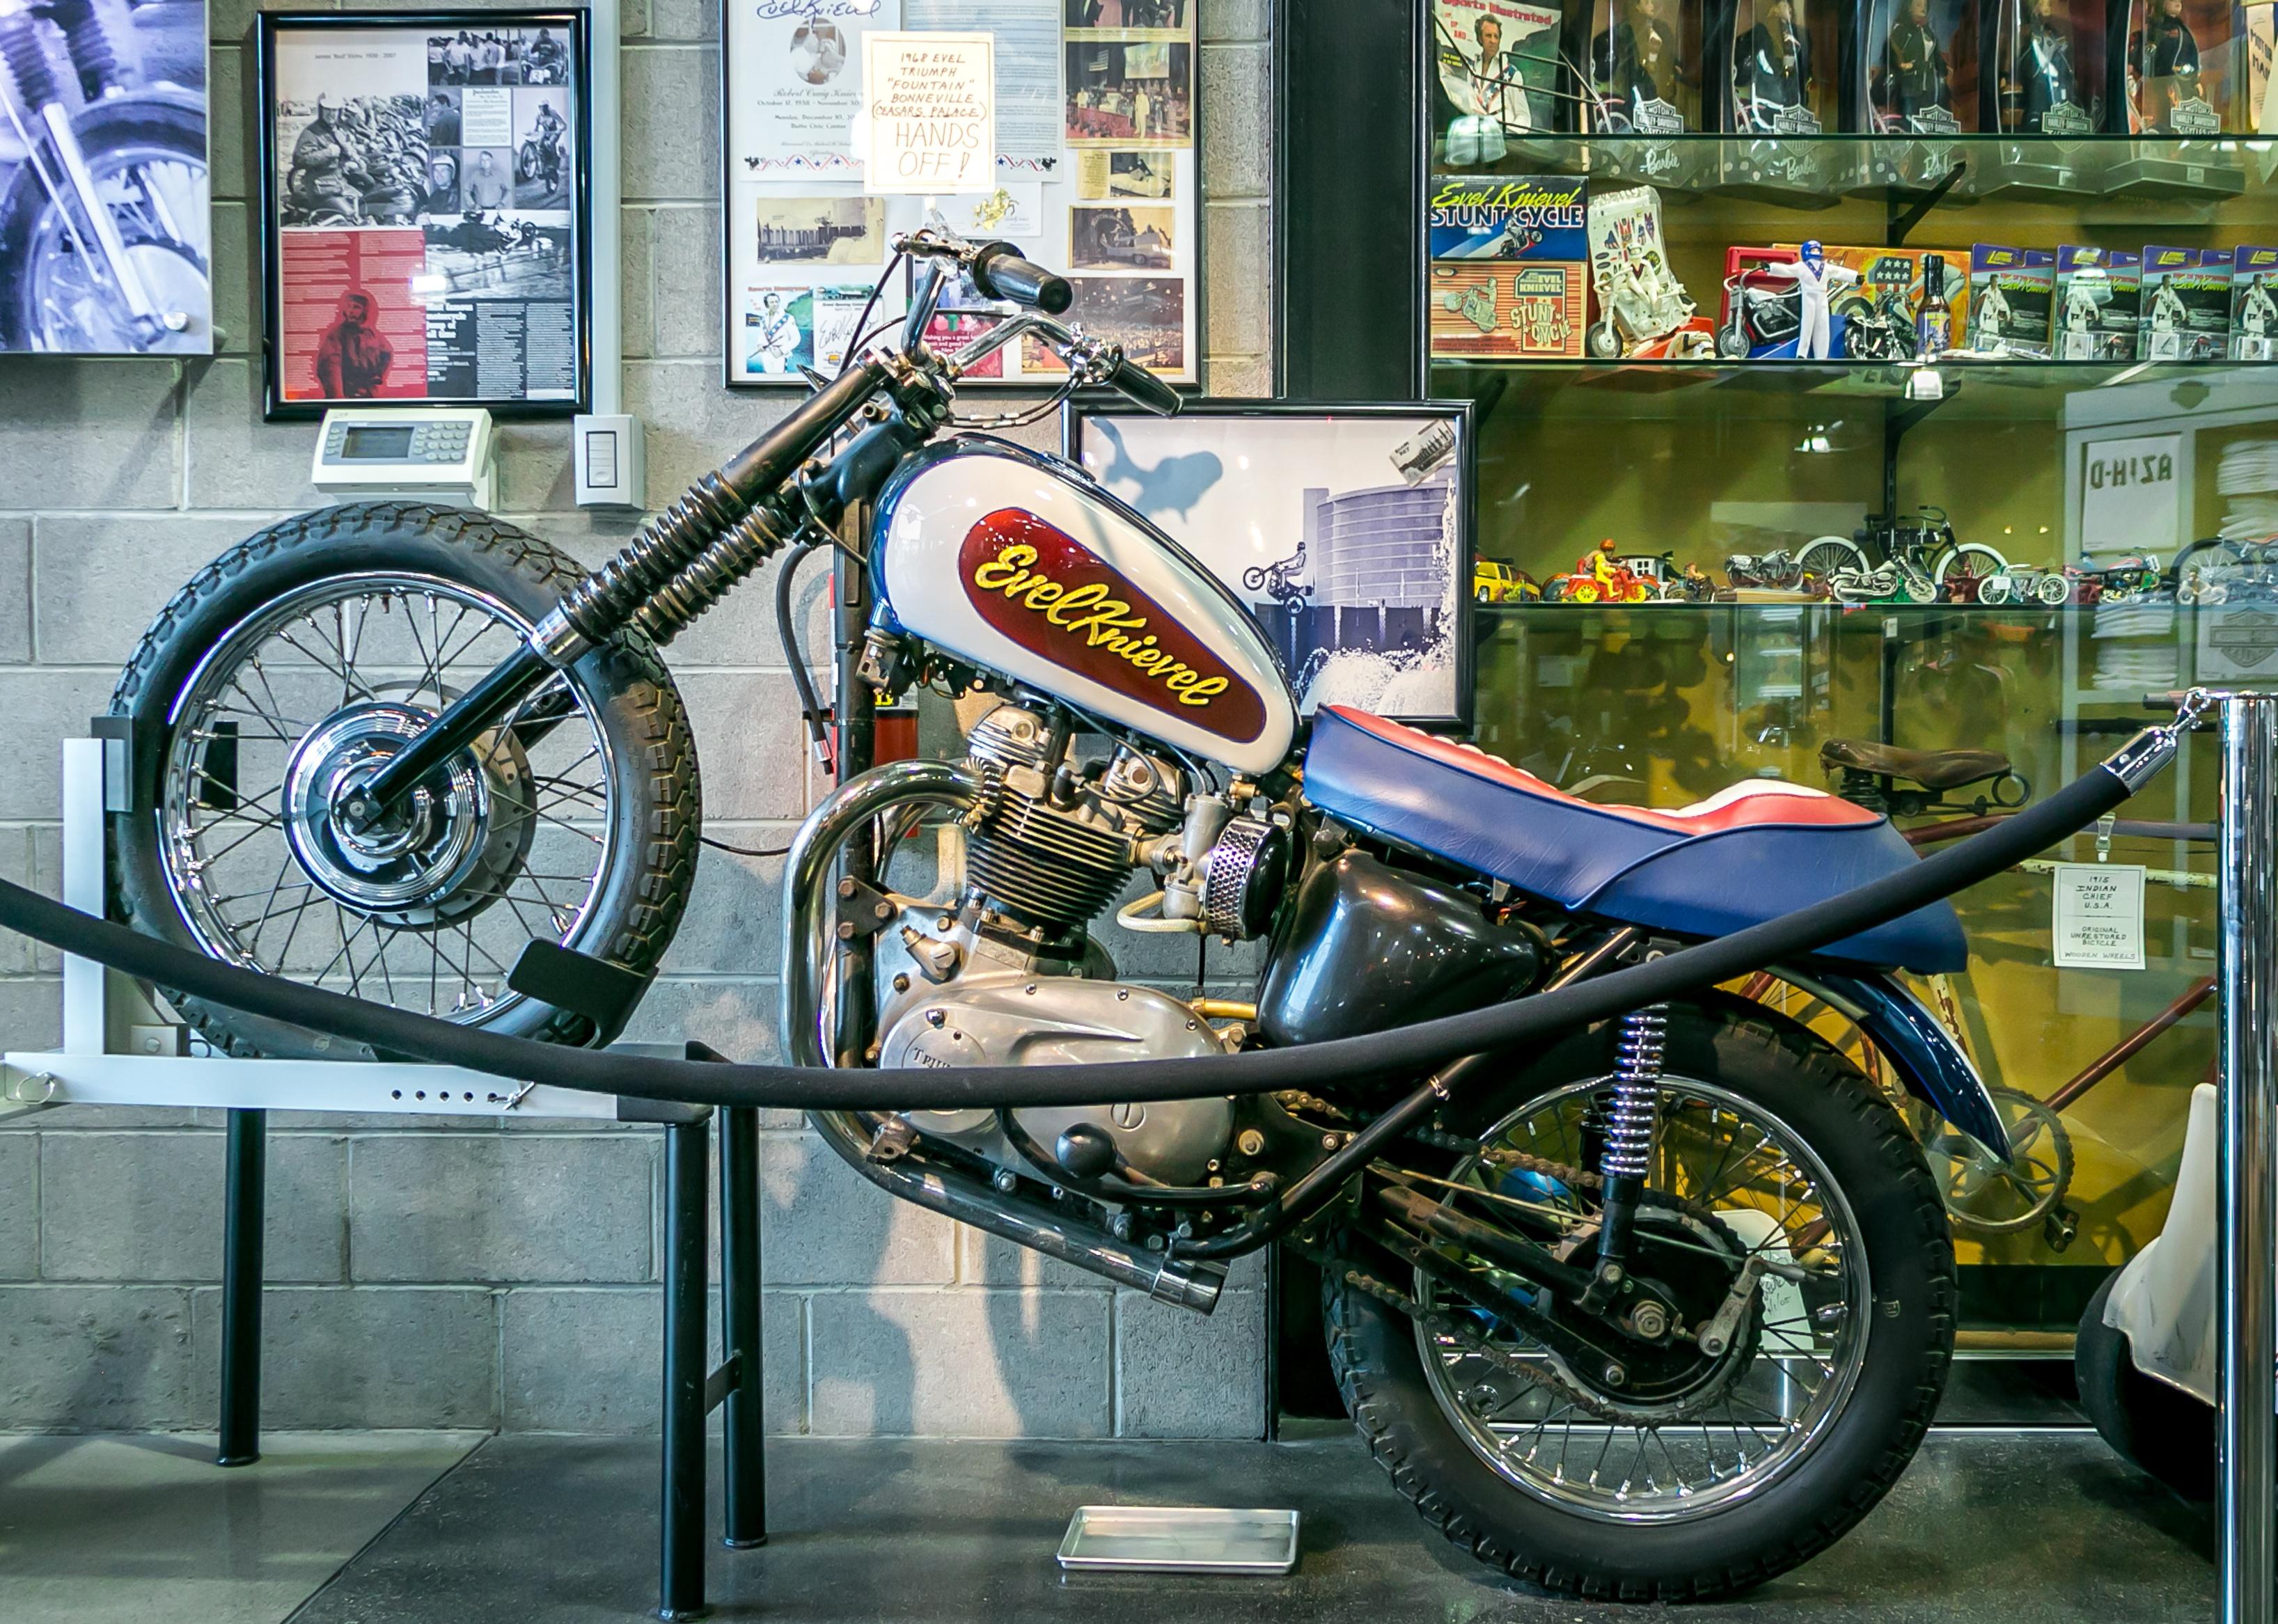 Evel Kniewel motorcycle on display.